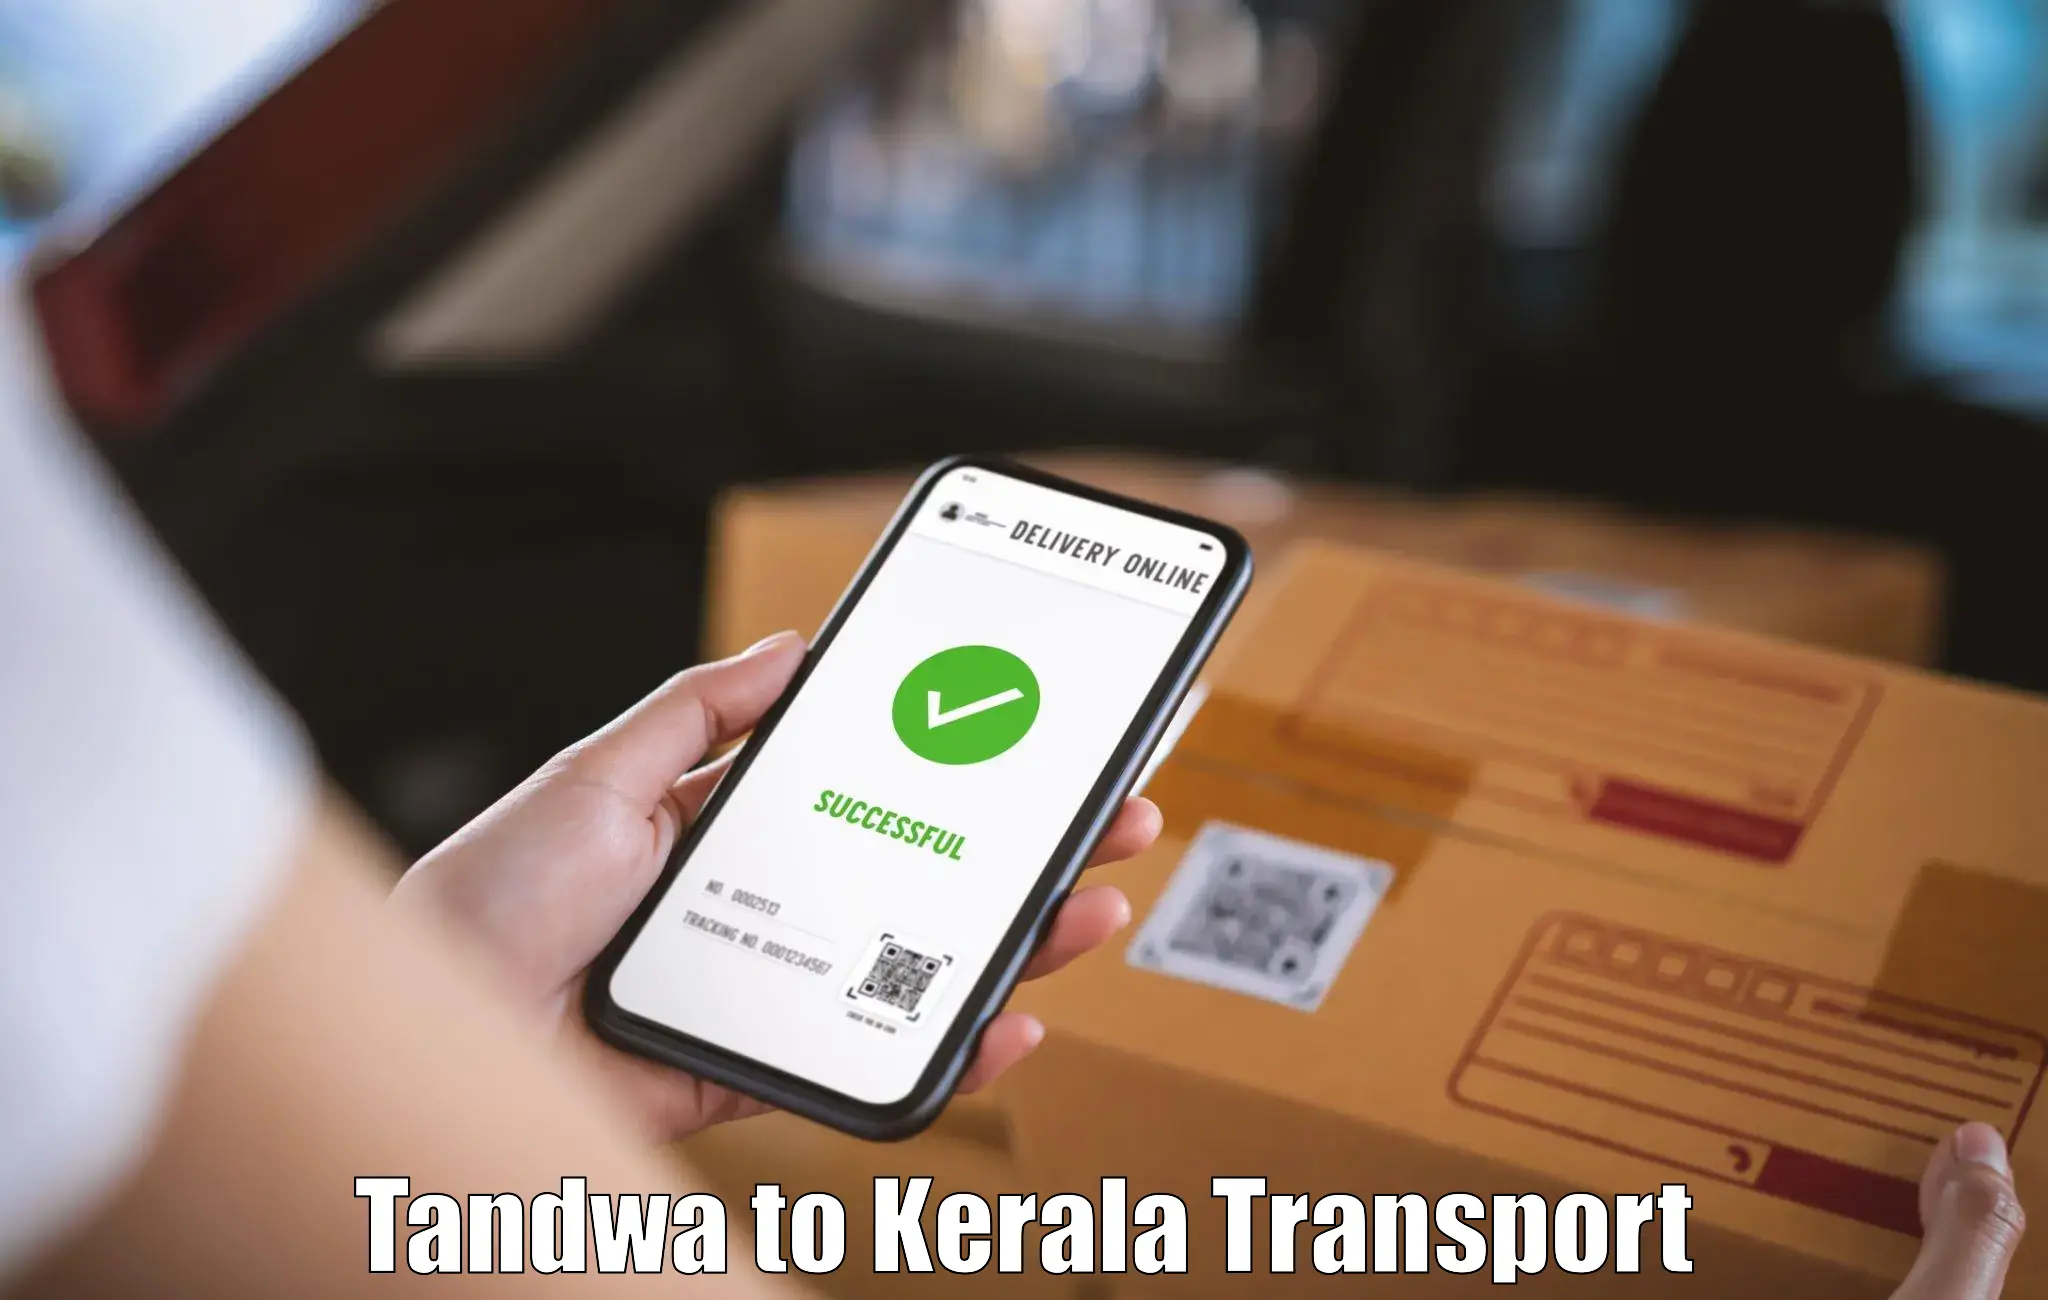 Online transport service Tandwa to Thiruvananthapuram